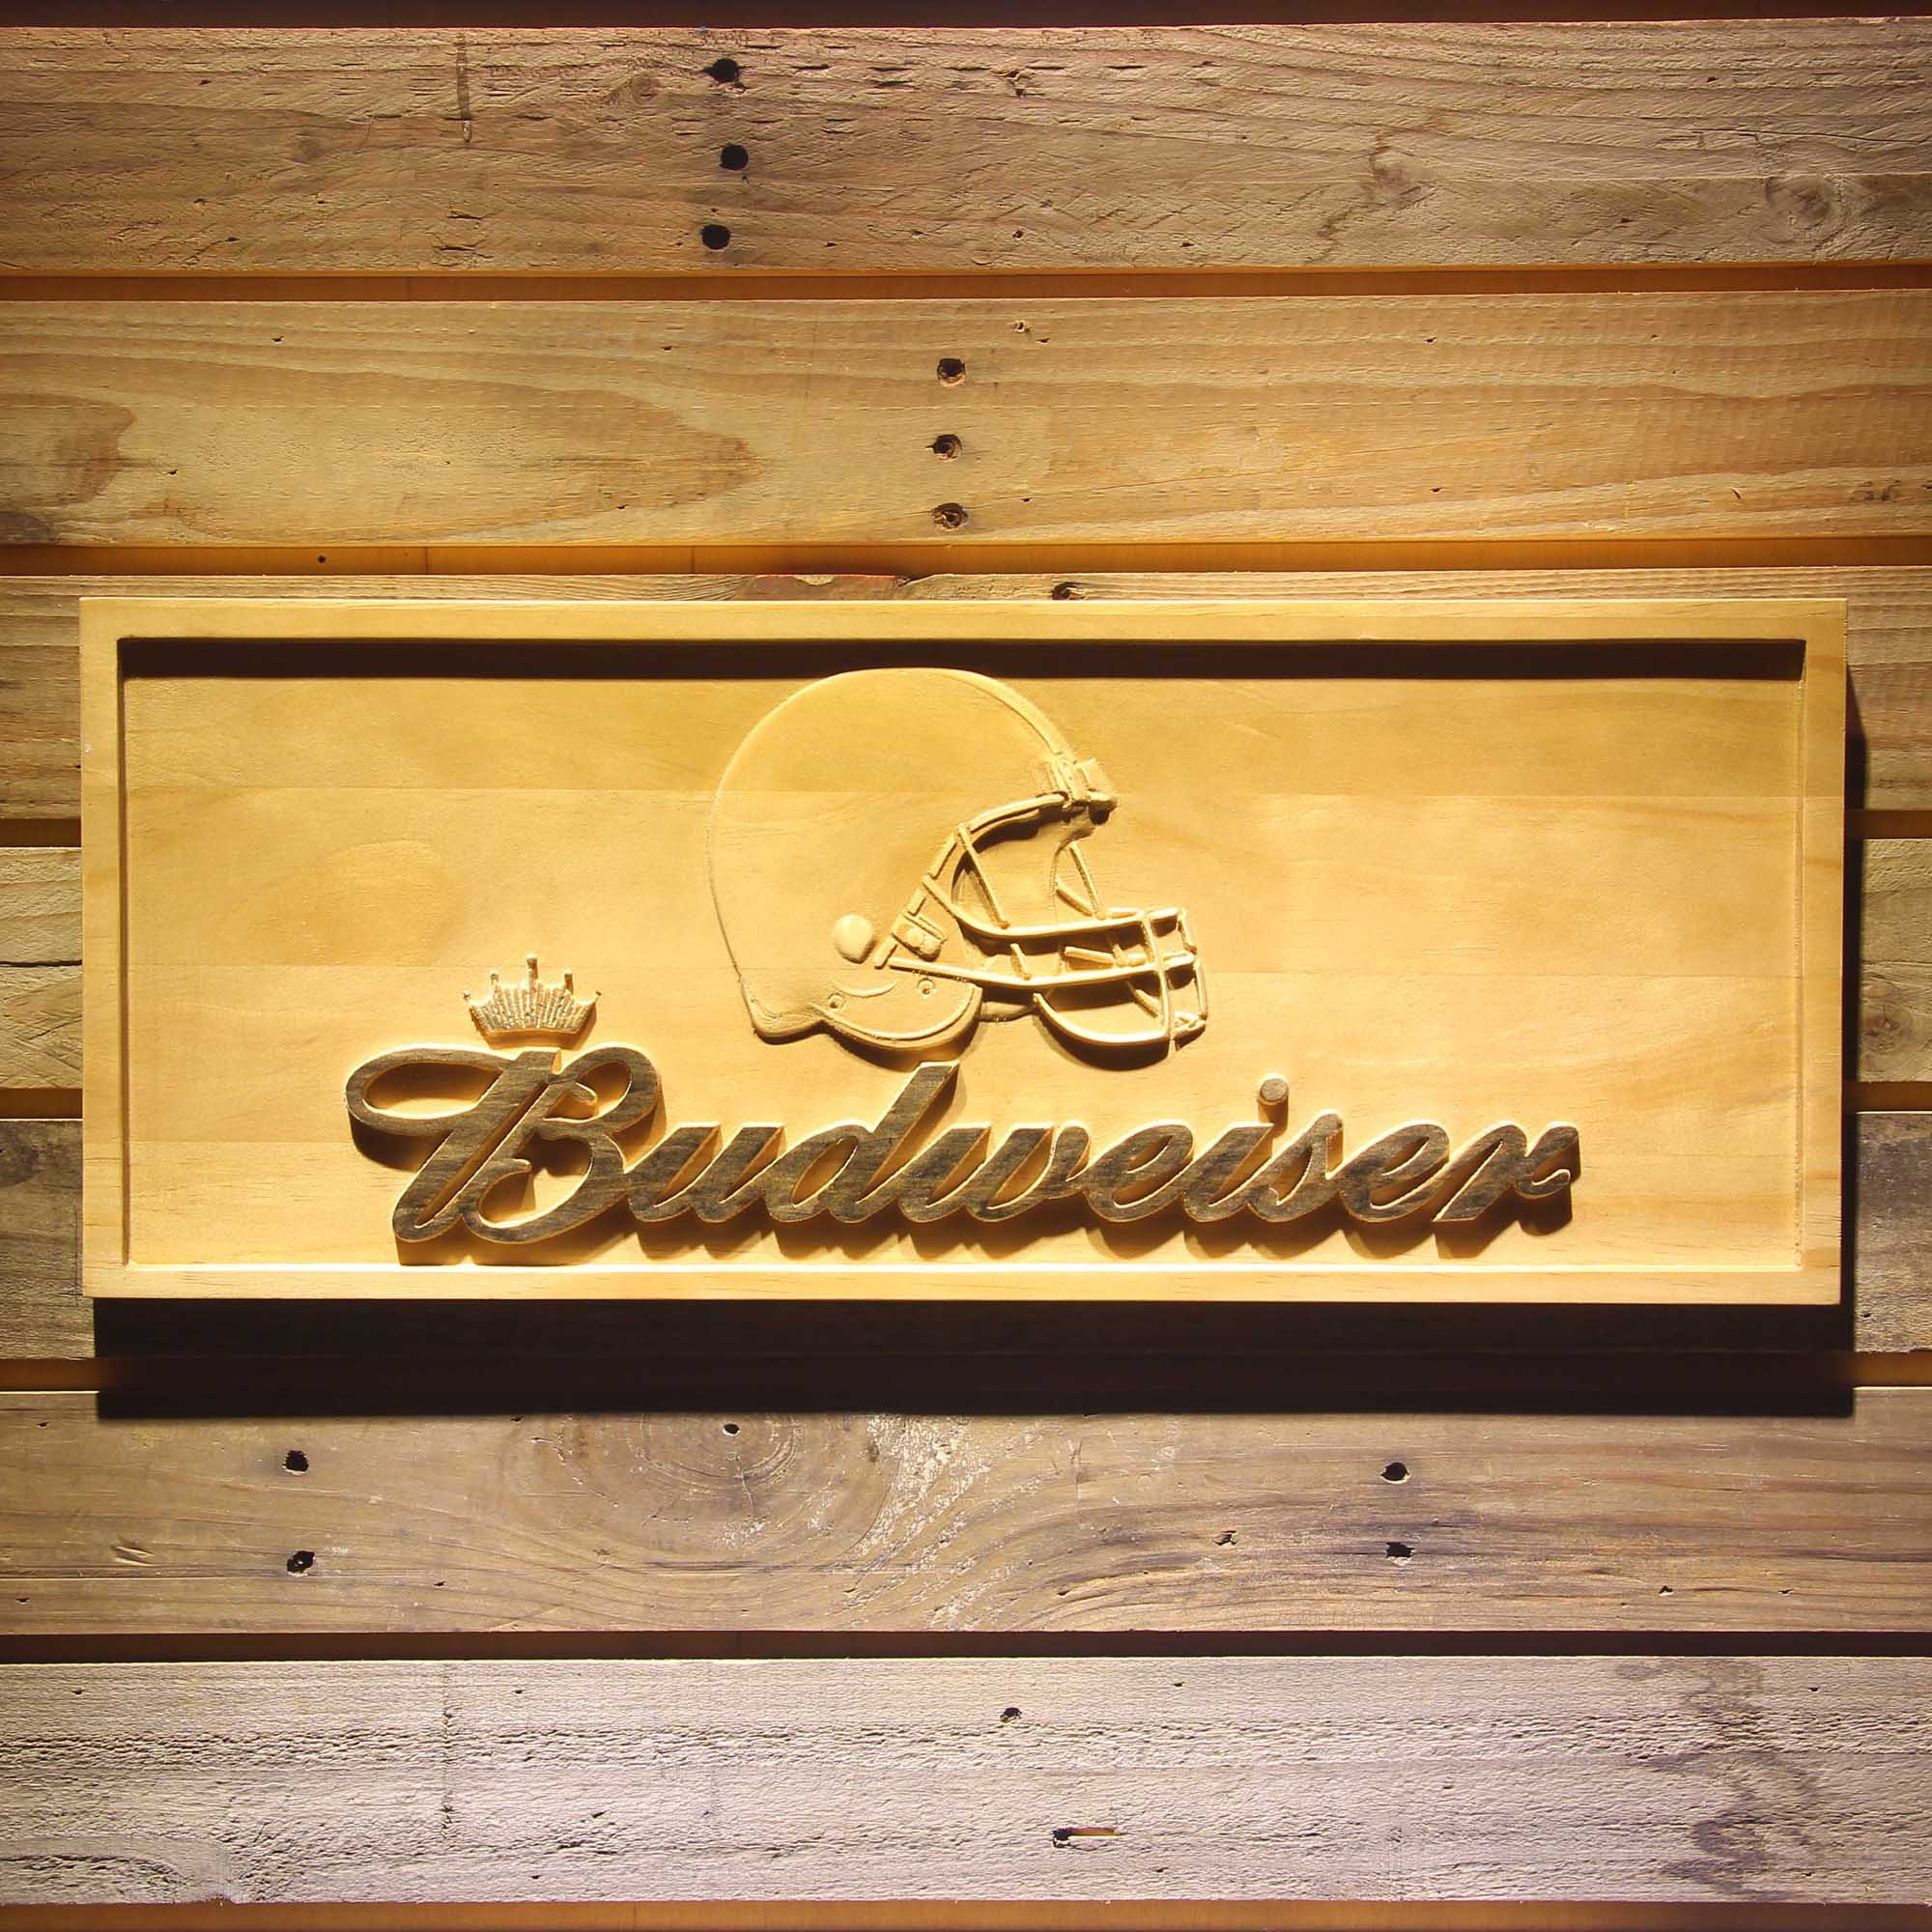 Cleveland Browns Budweiser 3D Wooden Engrave Sign